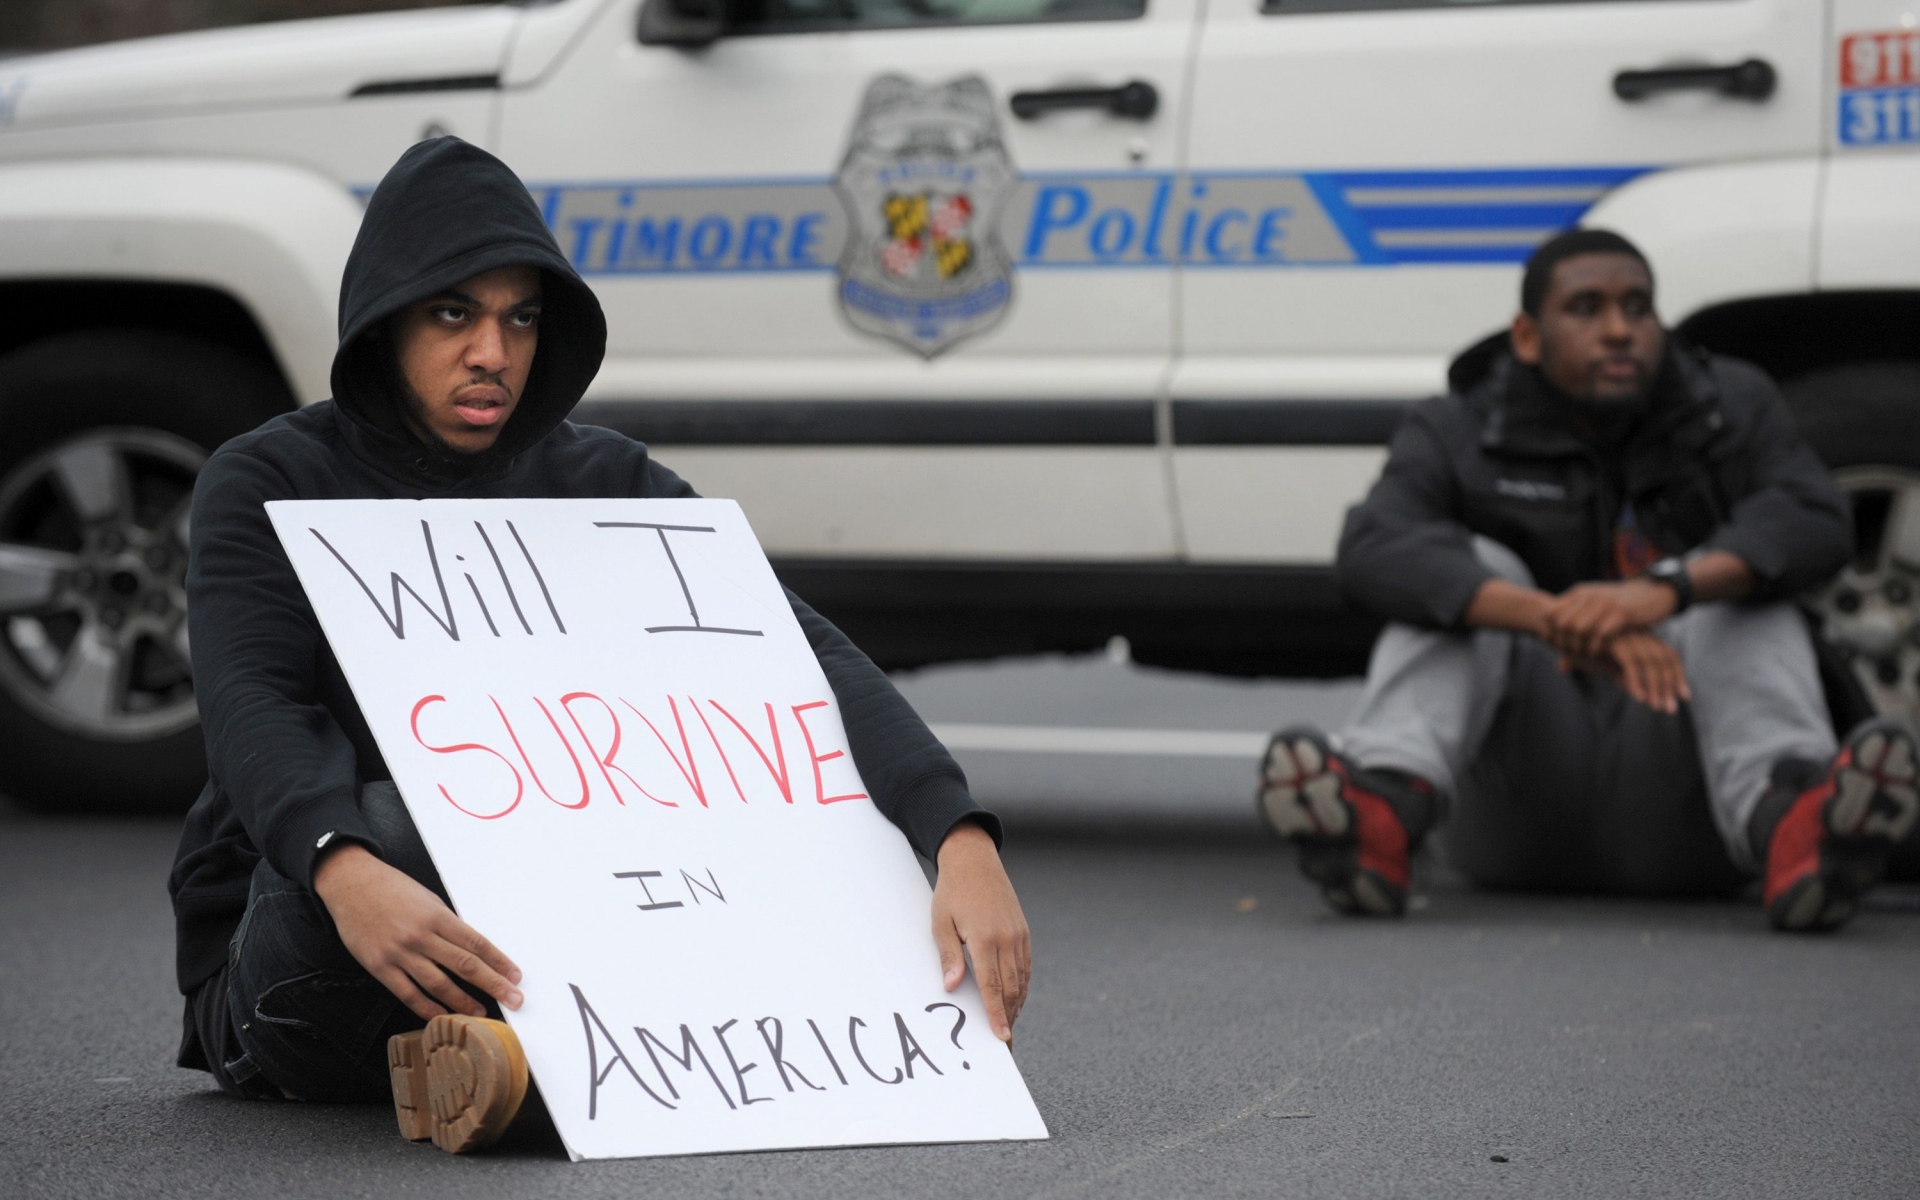 Картинки Freddie gray, 2015, балтимор, балтимор протест, полиция, автомобиль фото и обои на рабочий стол